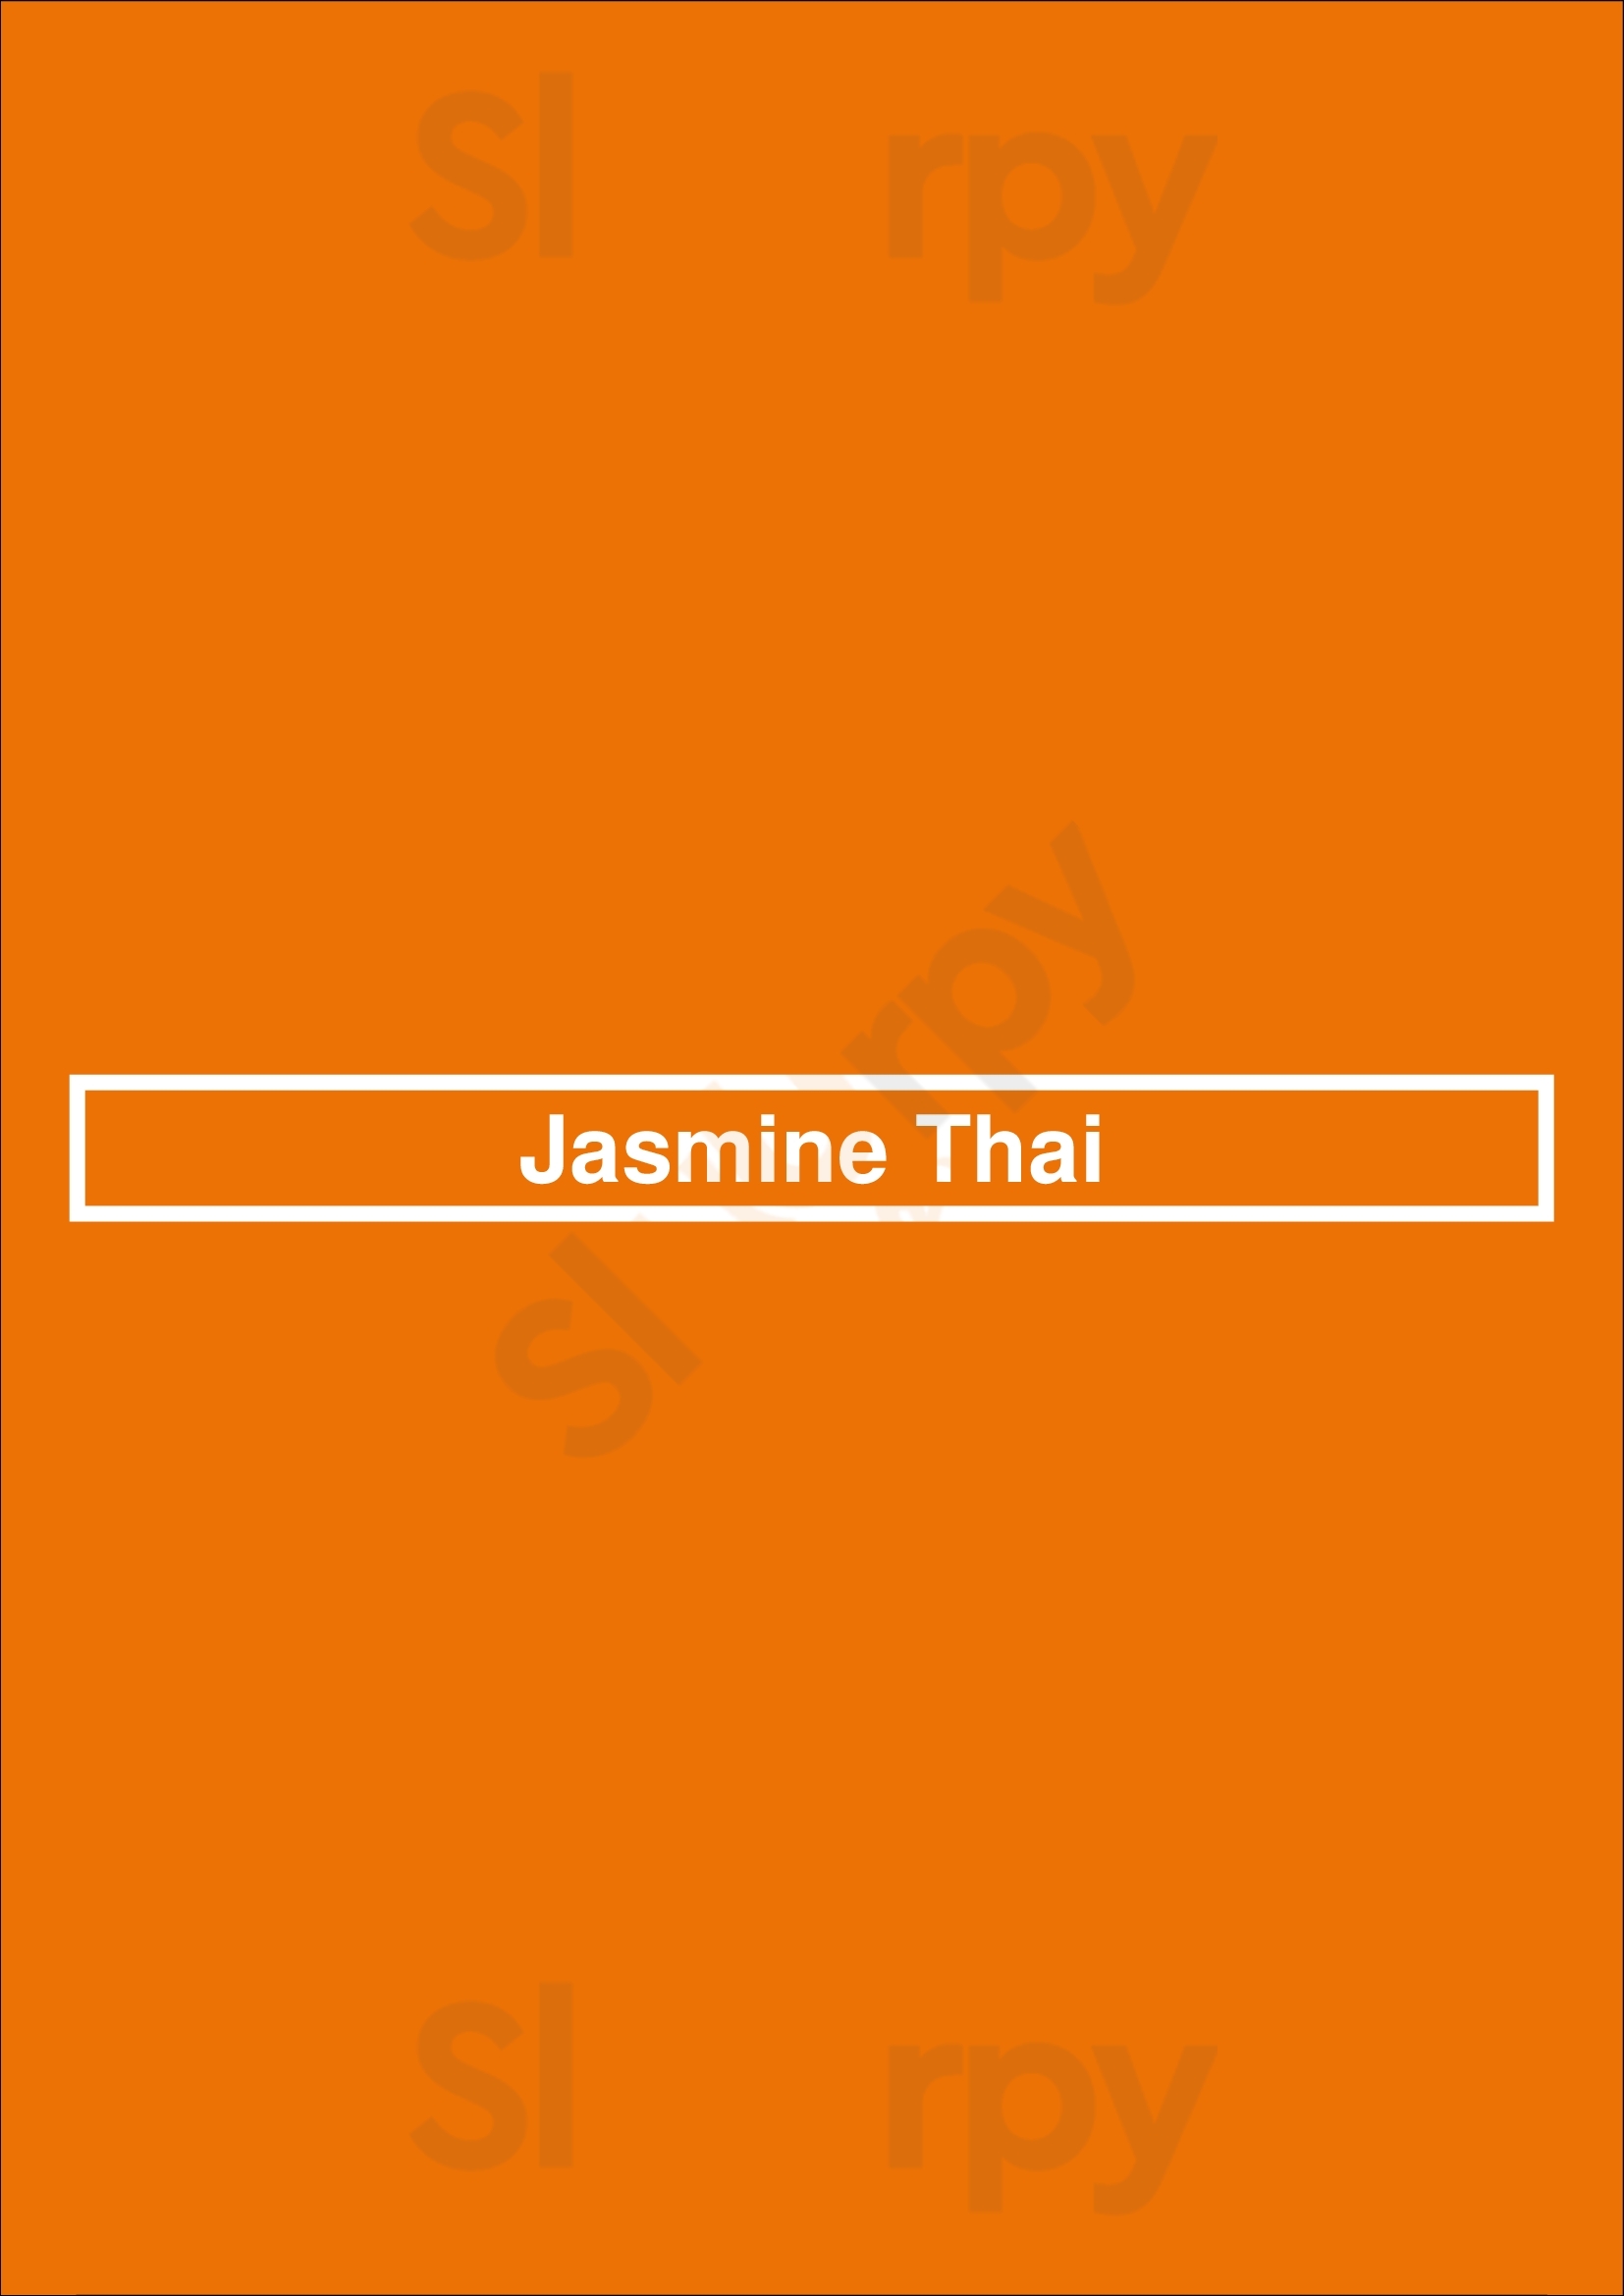 Jasmine Thai San Jose Menu - 1